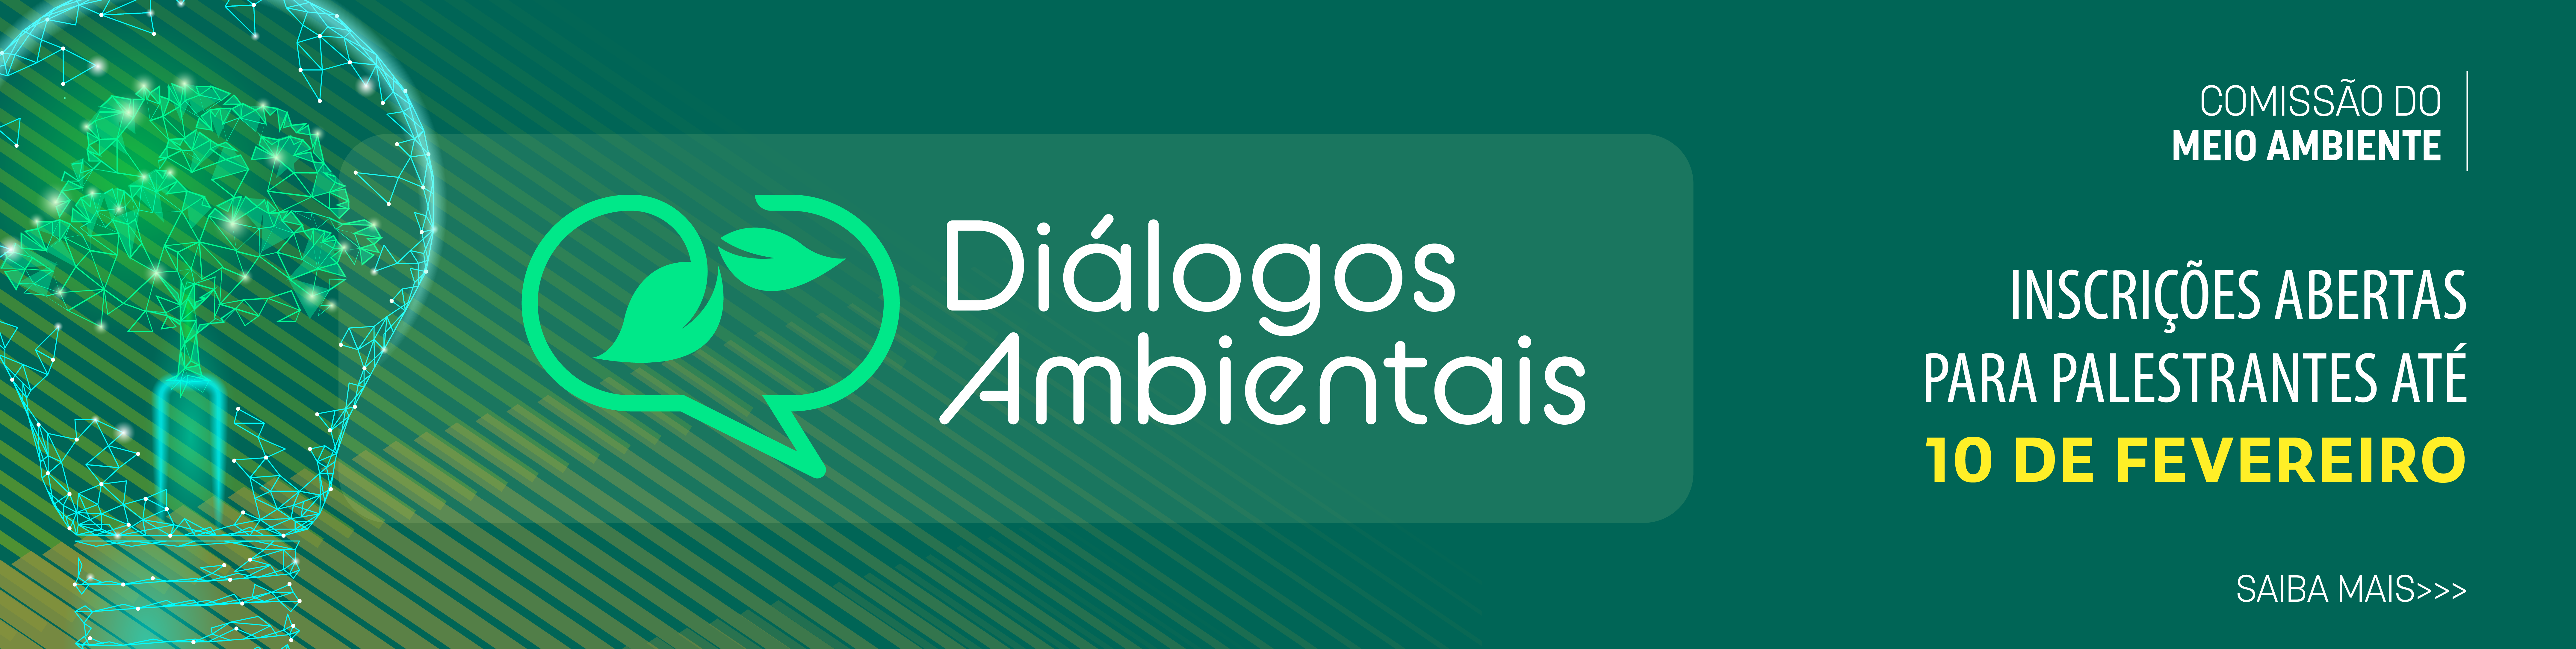 dialogos_ambientais_banner_web.png - 2,90 MB